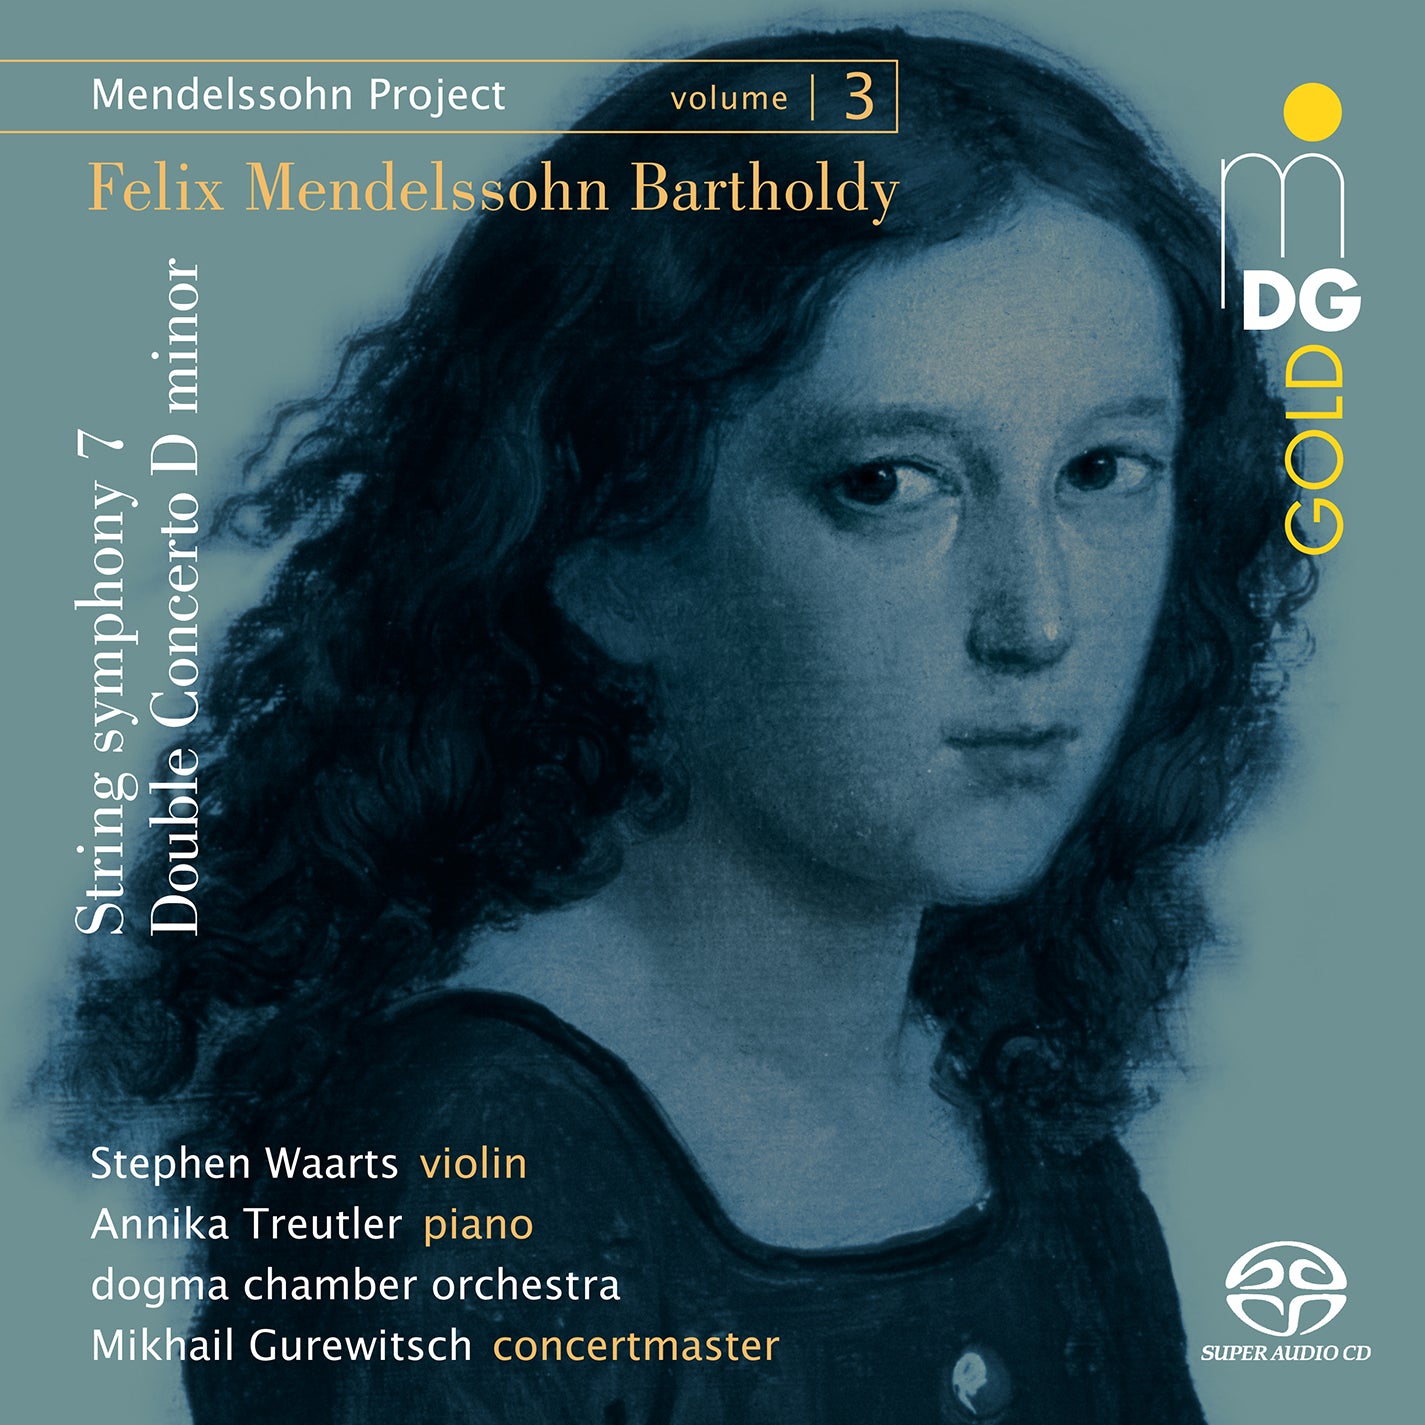 Mendelssohn Project, Vol. 3 / Waarts, Treutler, Gurewitsch, dogma chamber orchestra